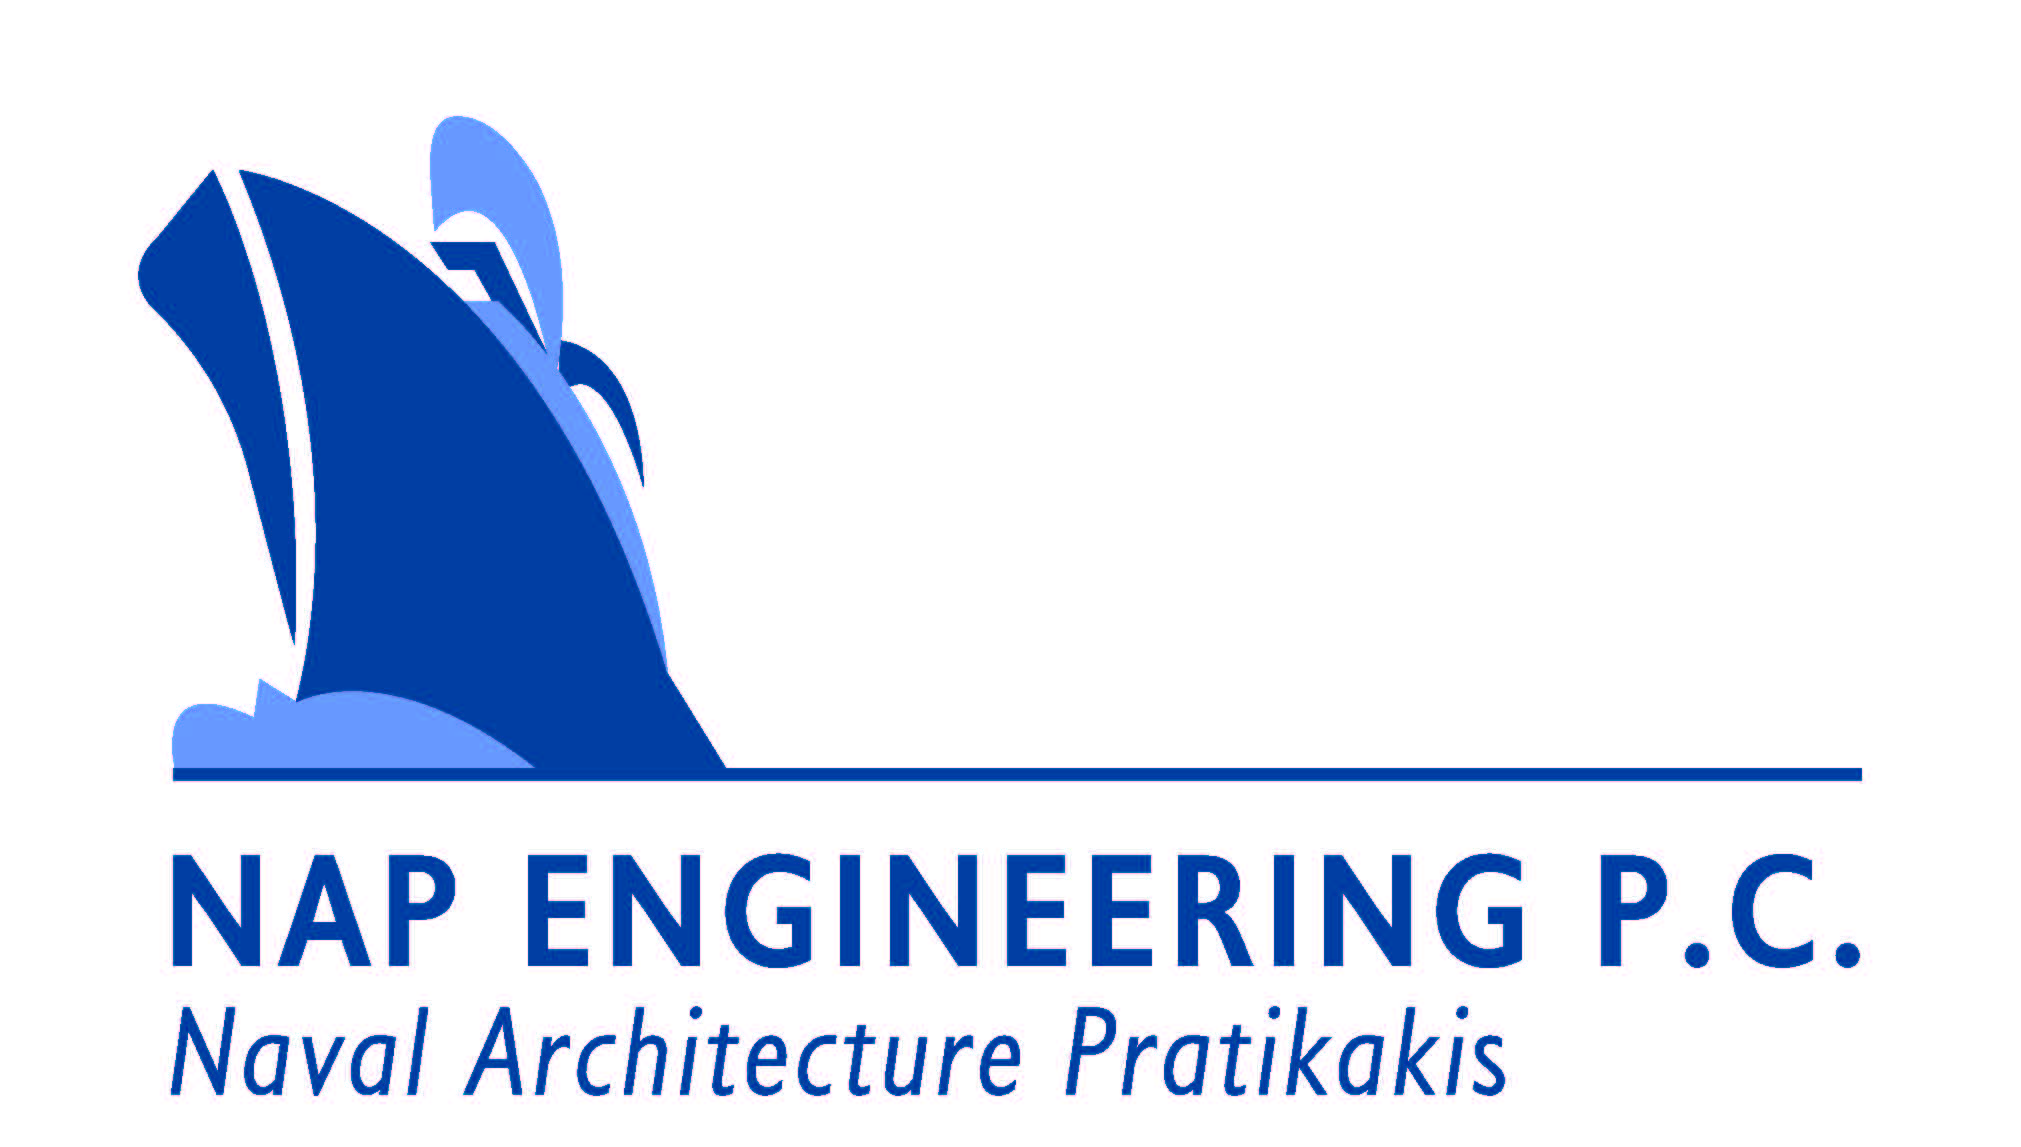 NAP ENGINEERING P.C. Naval Architecture Pratikakis